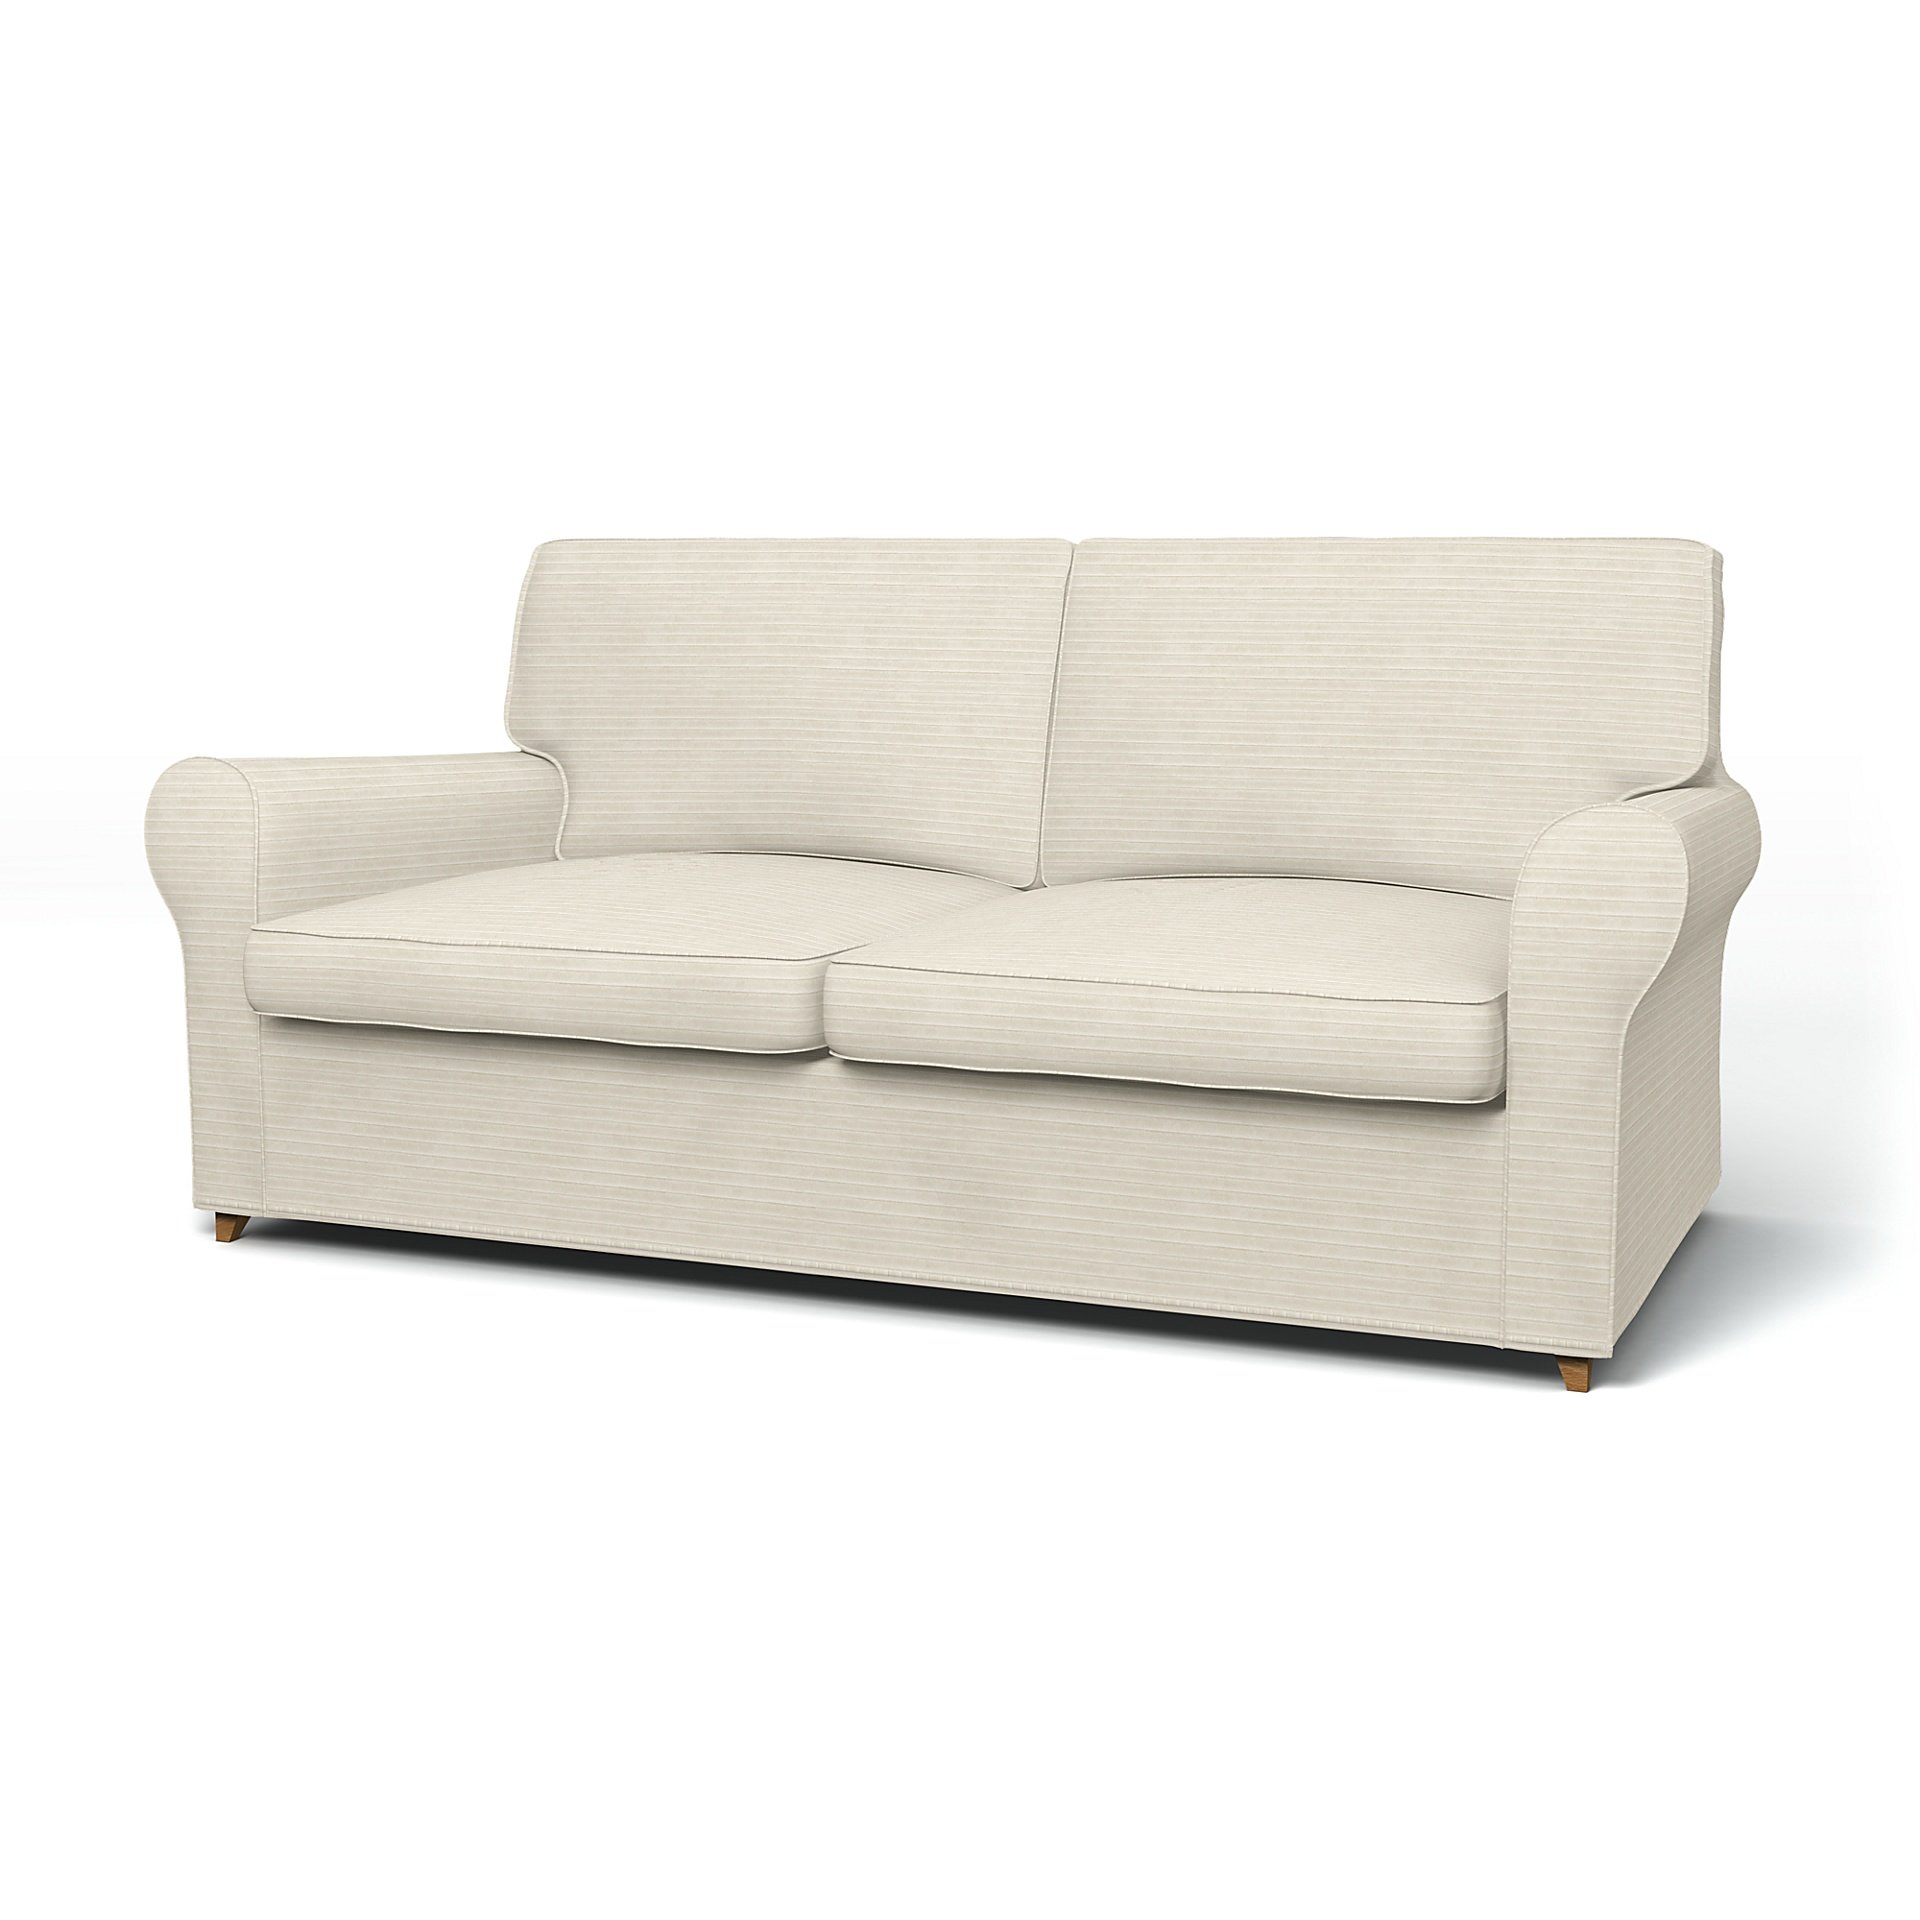 IKEA - Angby Sofa Bed Cover, Tofu, Corduroy - Bemz